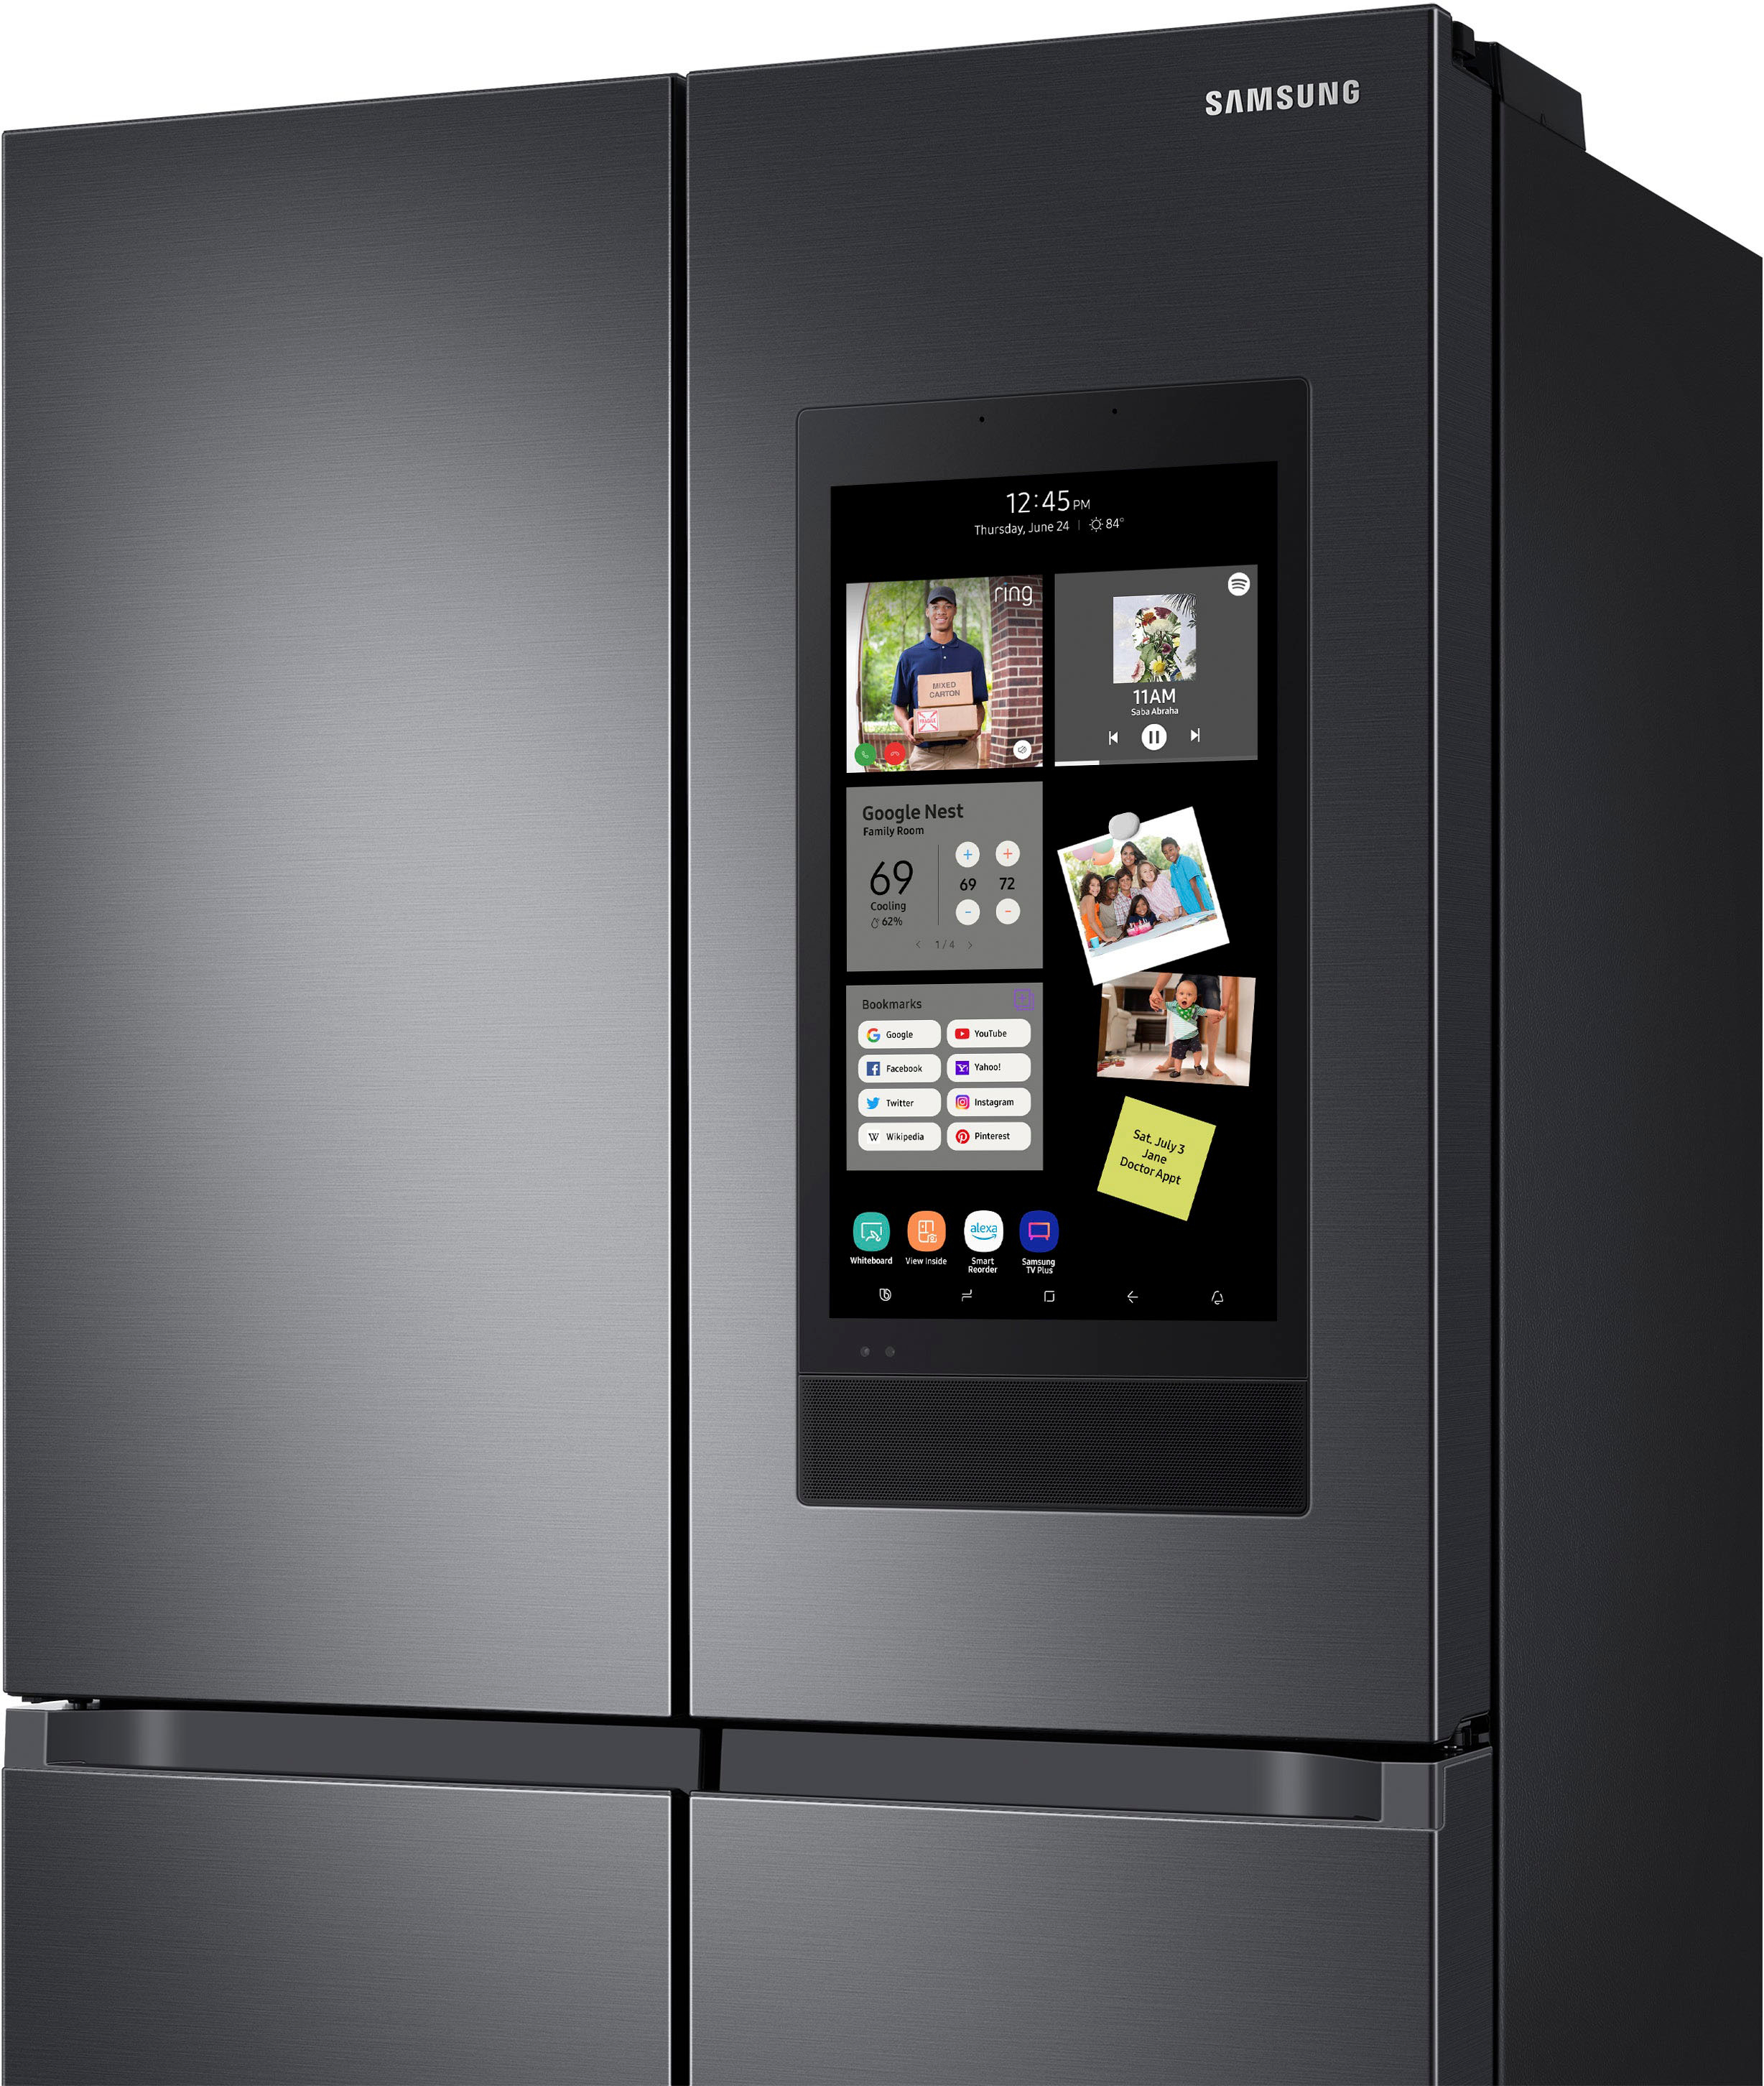 Samsung Fingerprint Resistant Black Stainless Steel 4-Door Flex Refrigerator